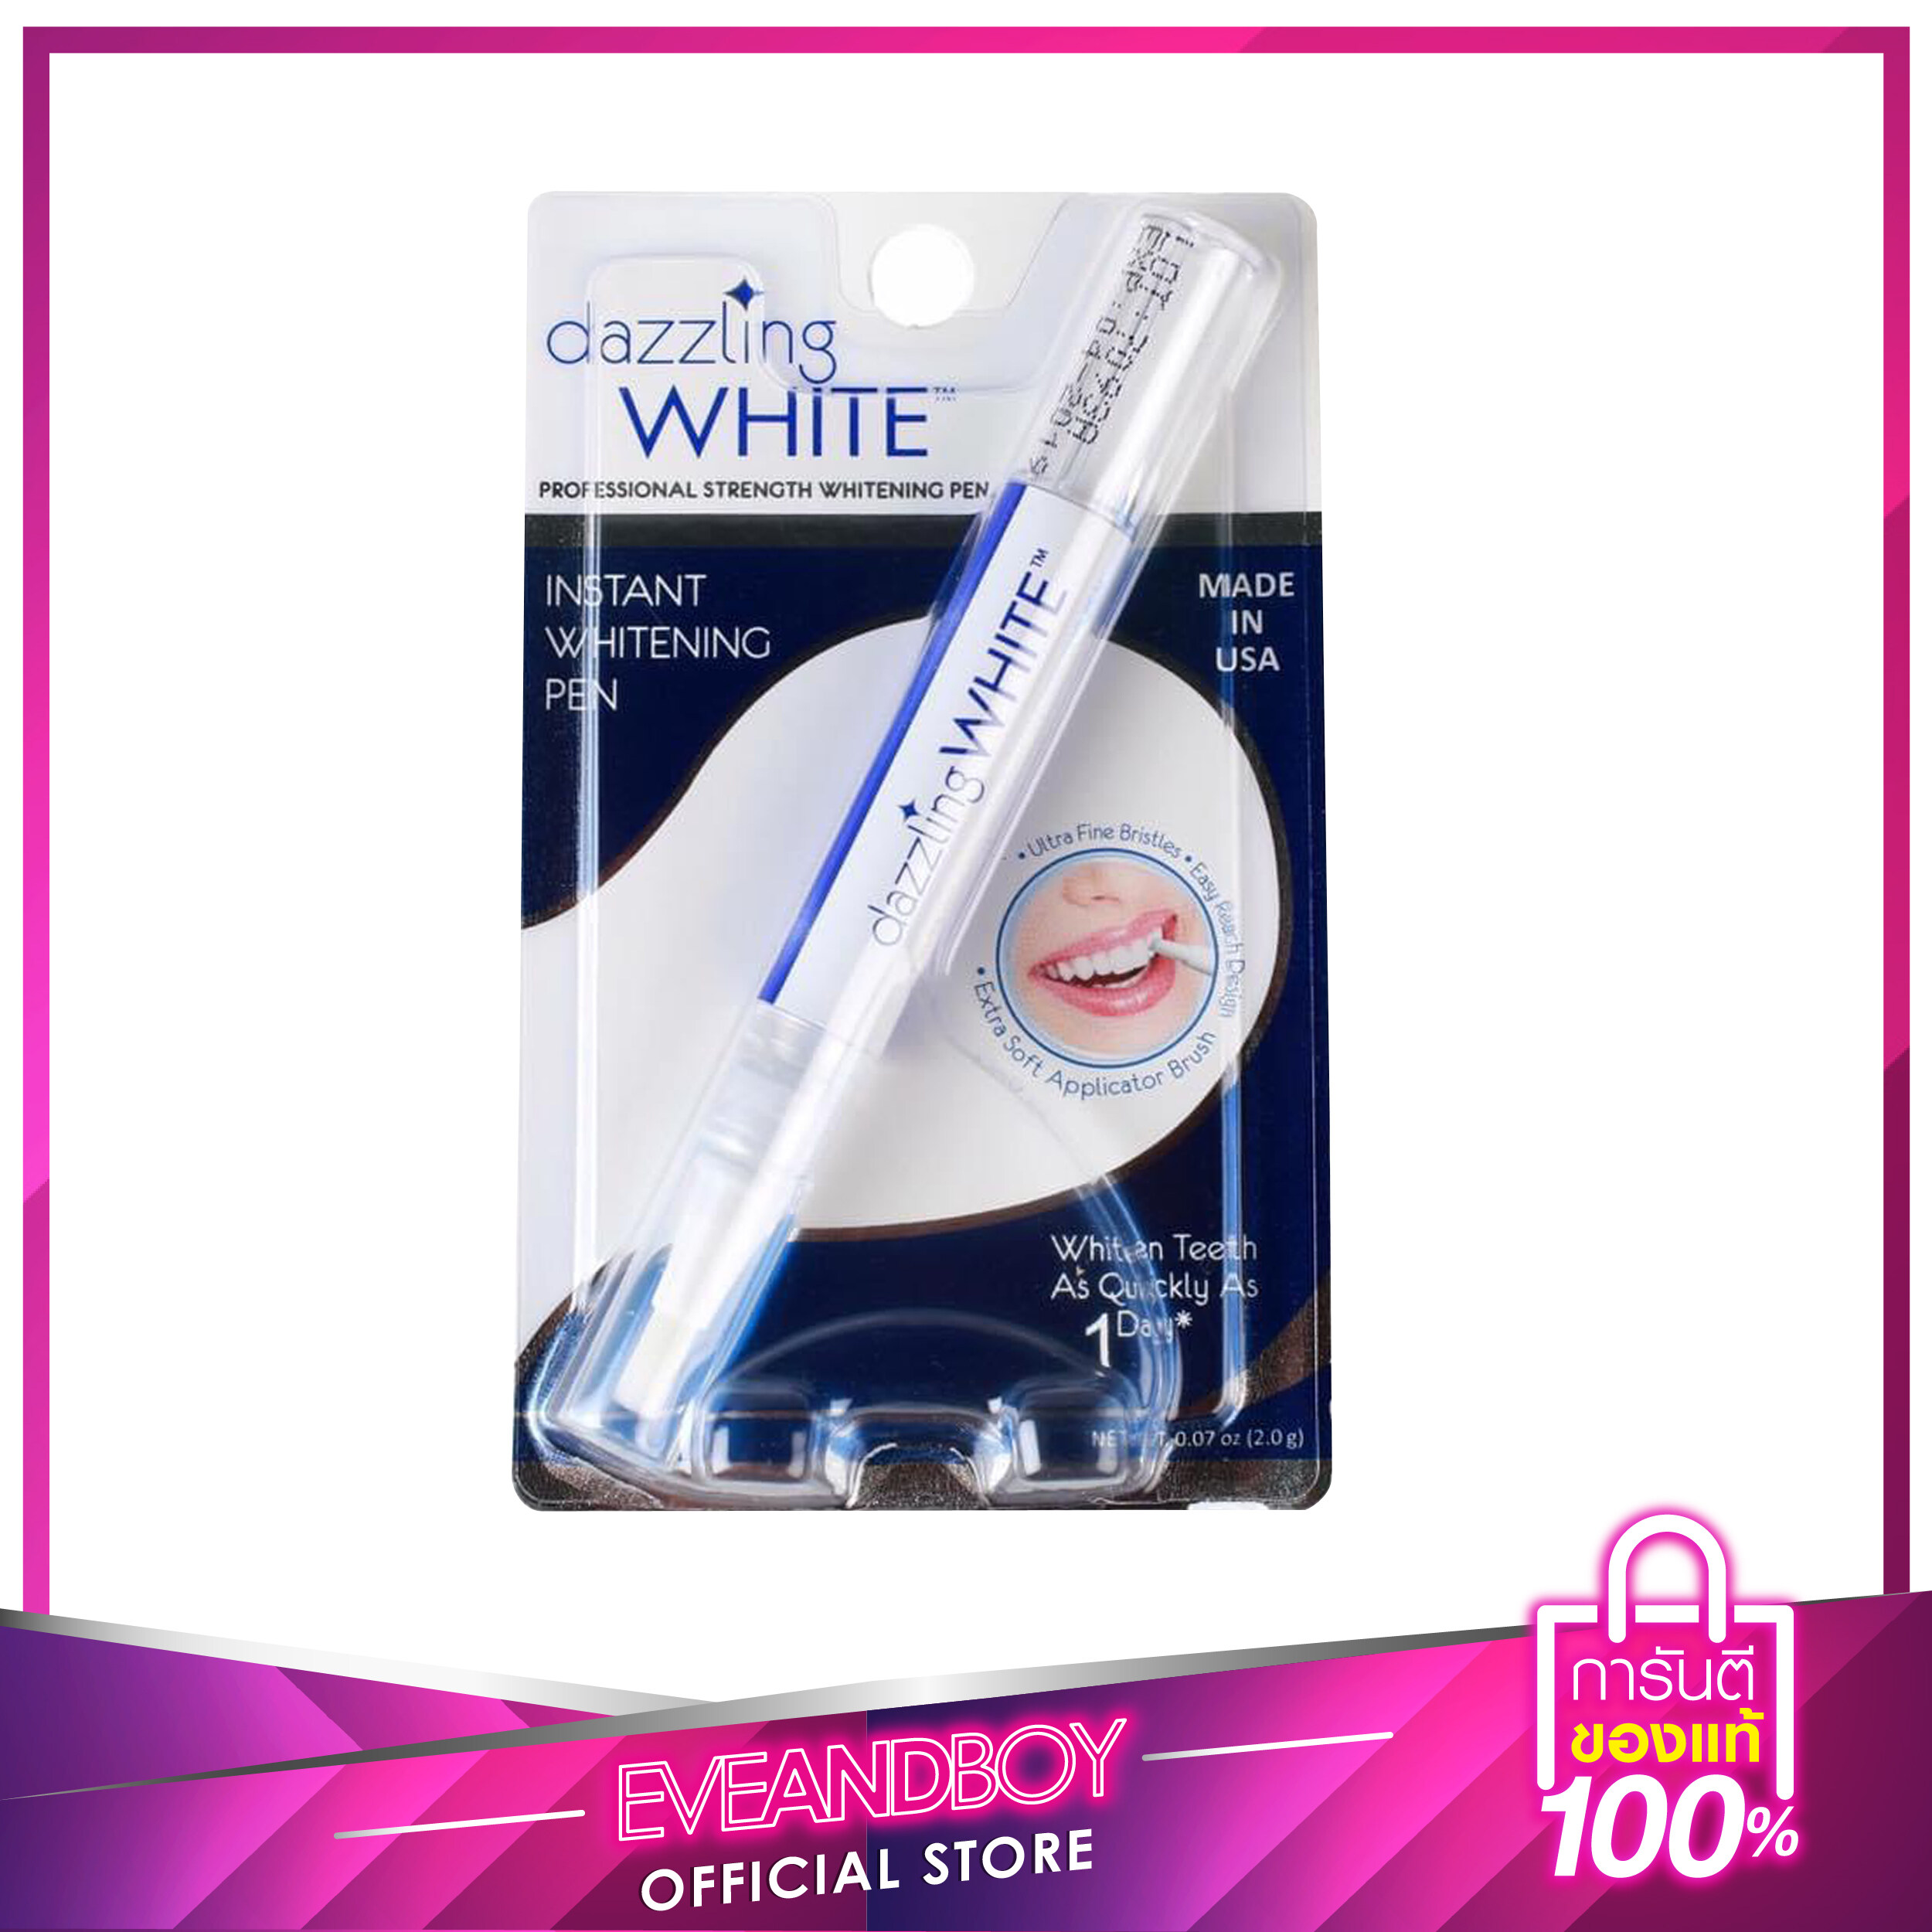 Dazzling White - Professional Strength Whitening Pen 2 G.. 